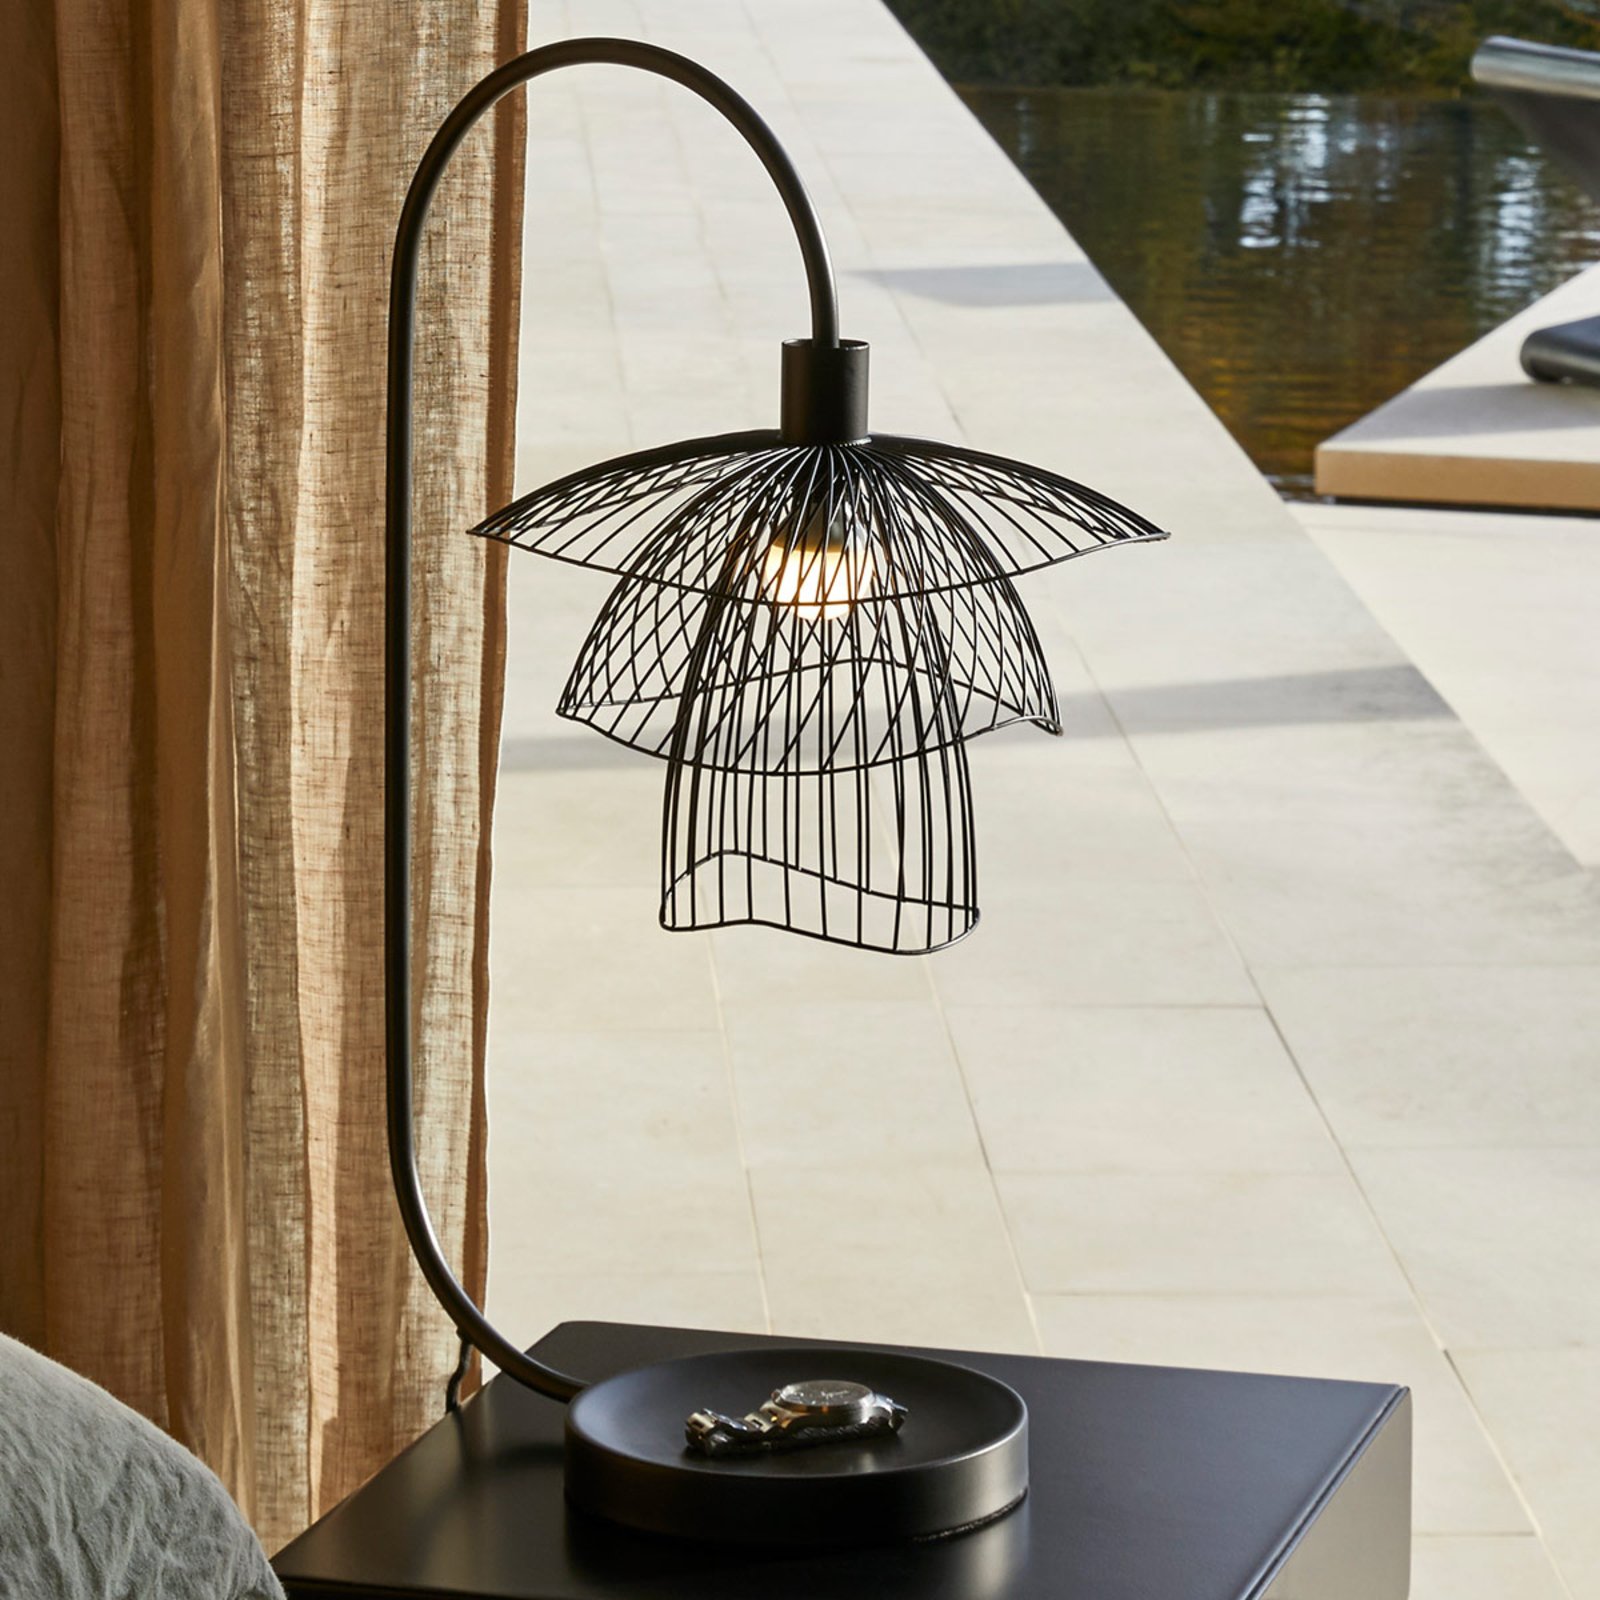 Forestier Papillon XS table lamp, black